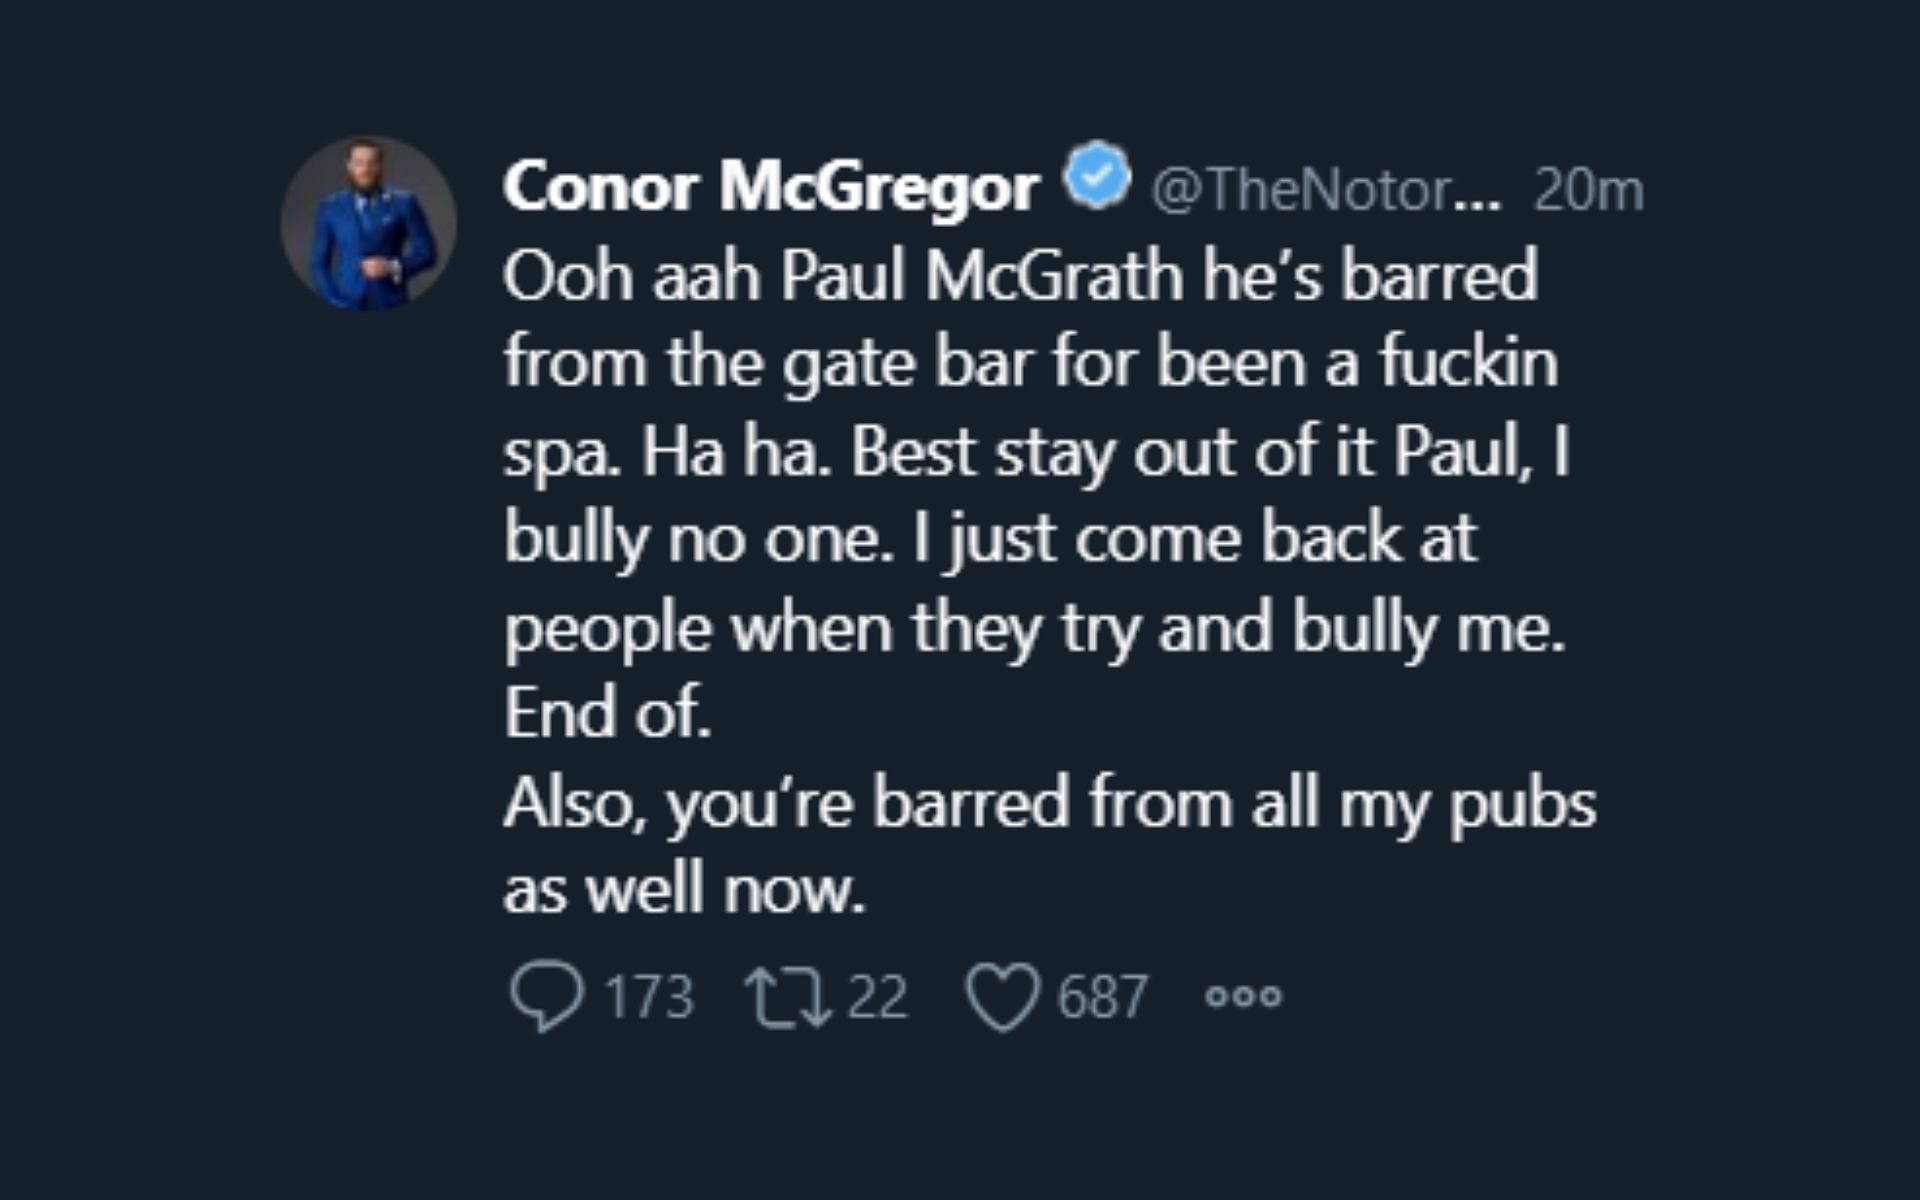 Conor McGregor&#039;s tweet directed at Paul McGrath [Image courtesy: @TheNotoriousMMA]